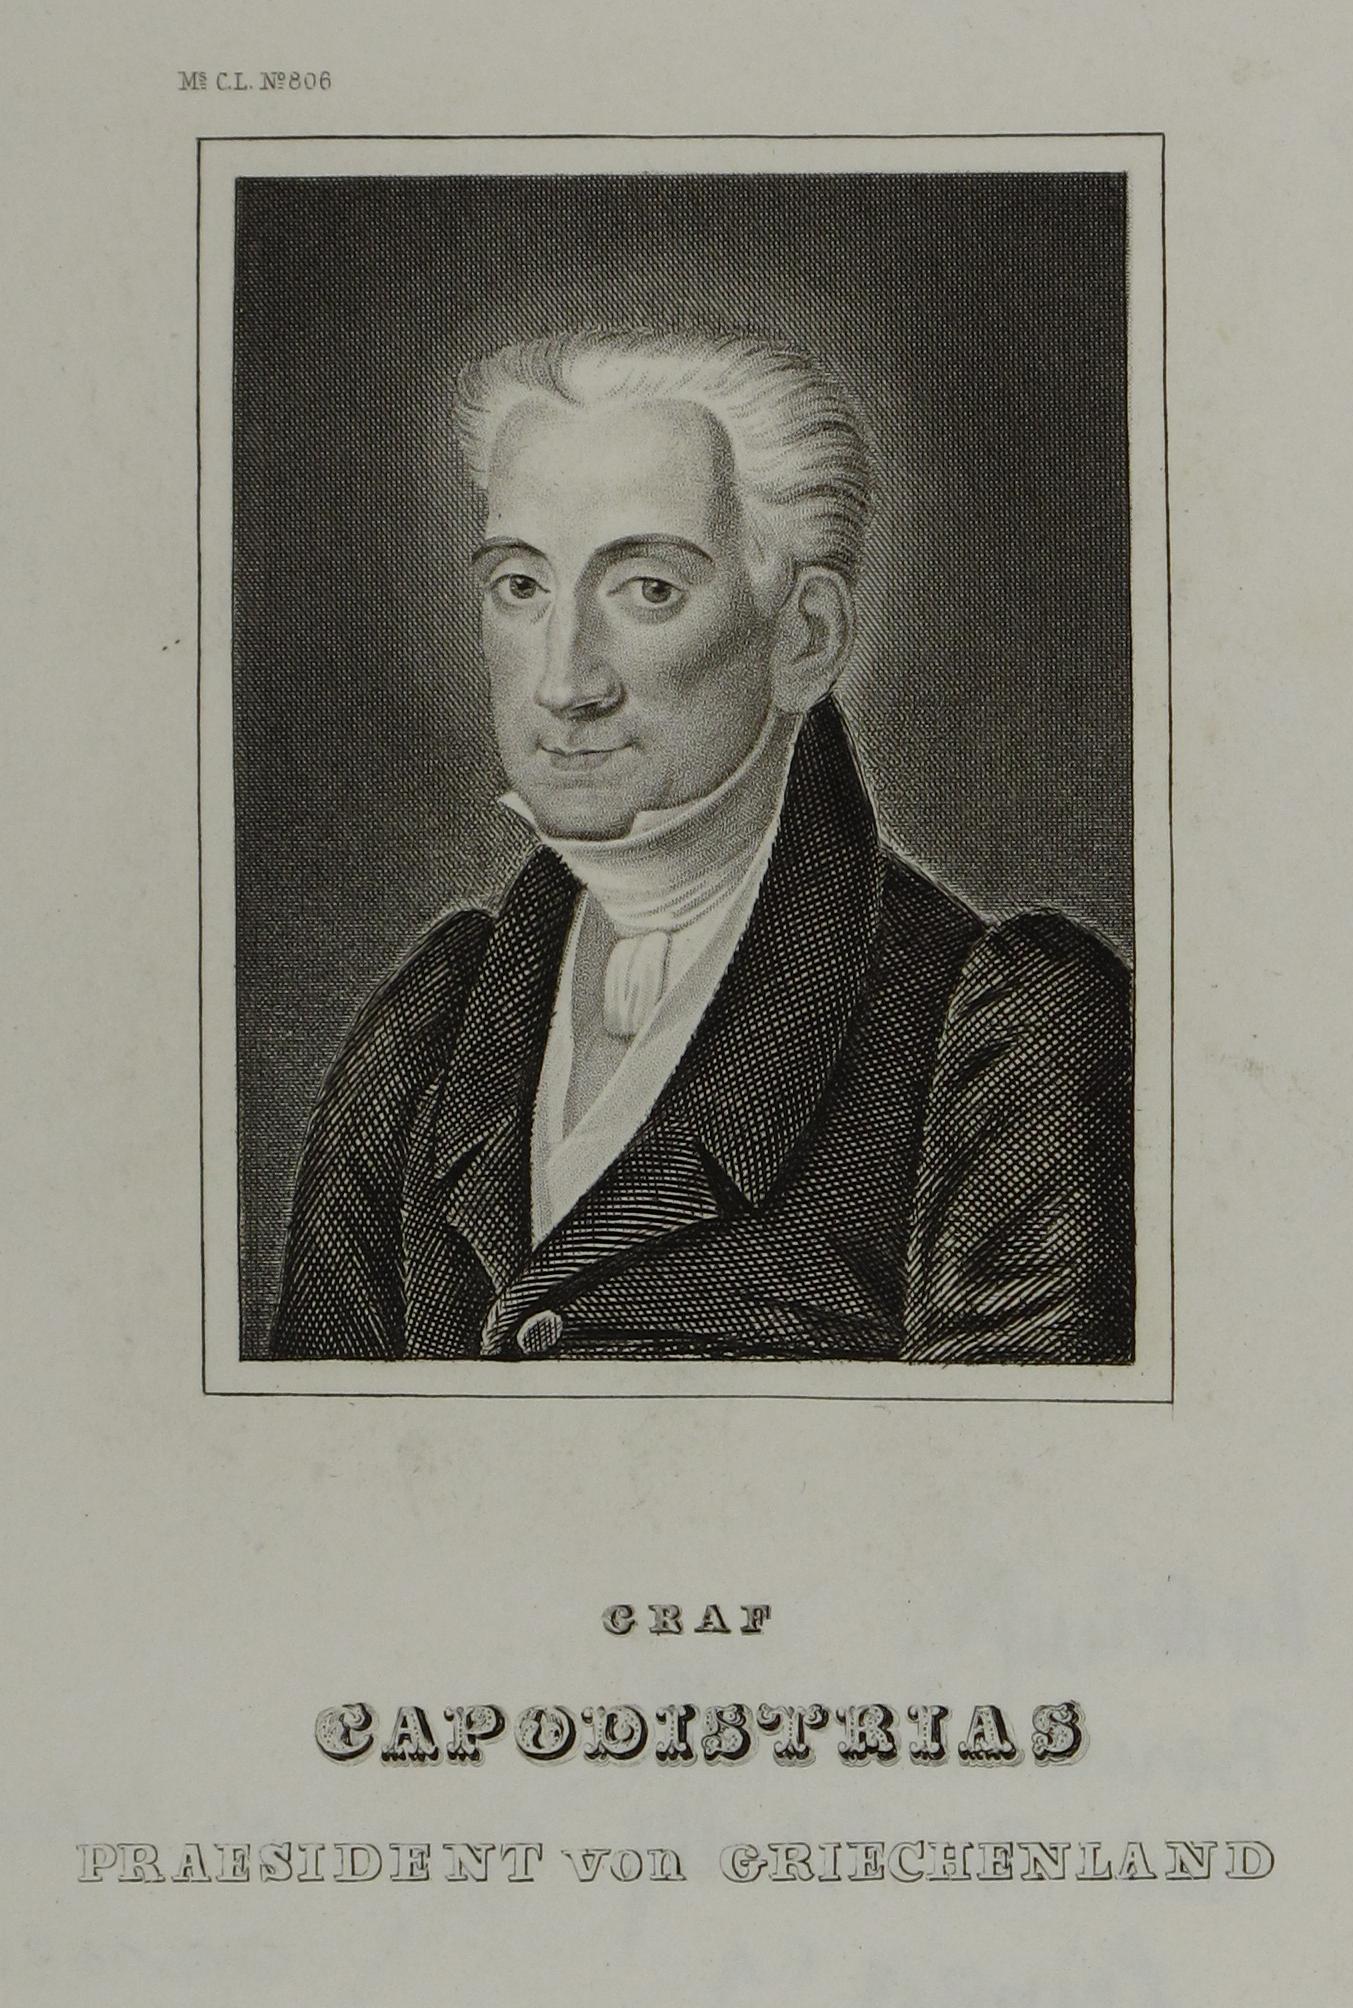 [Grafik: Porträt des griechischen Politikers Ioannis Kapodistrias, um 1850]